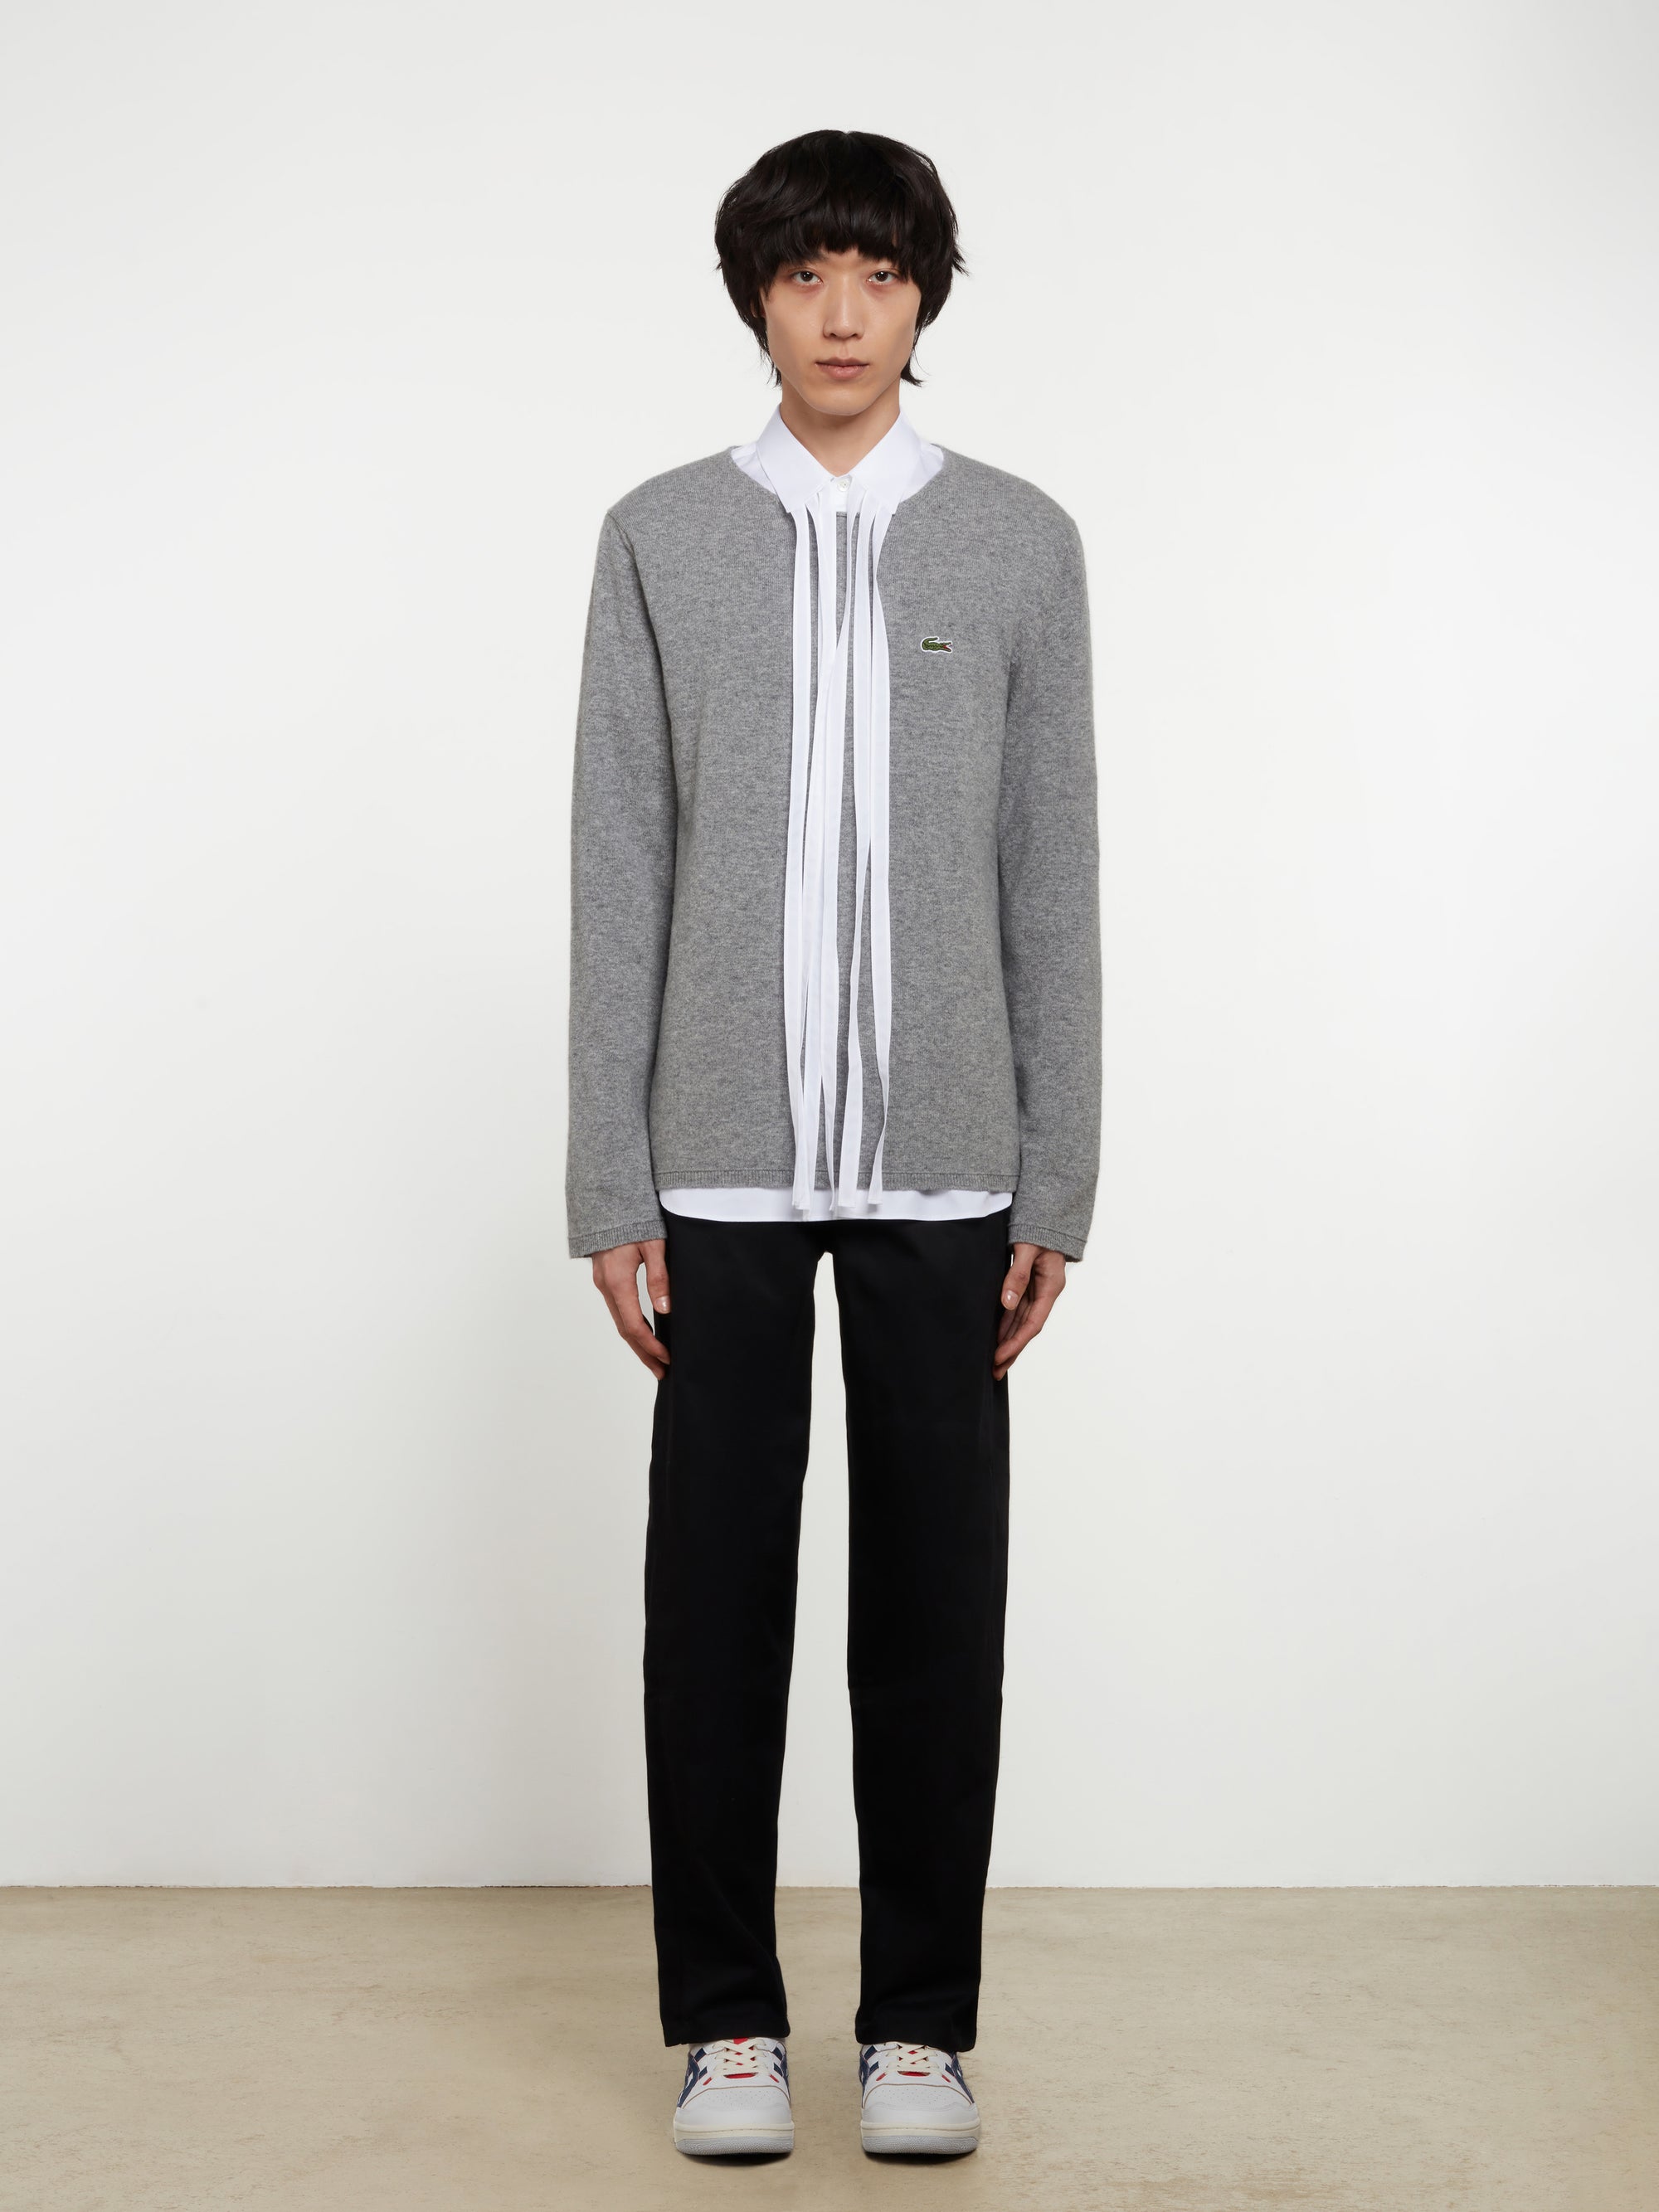 CDG Shirt - Lacoste Men’s Sweater - (Grey) view 4